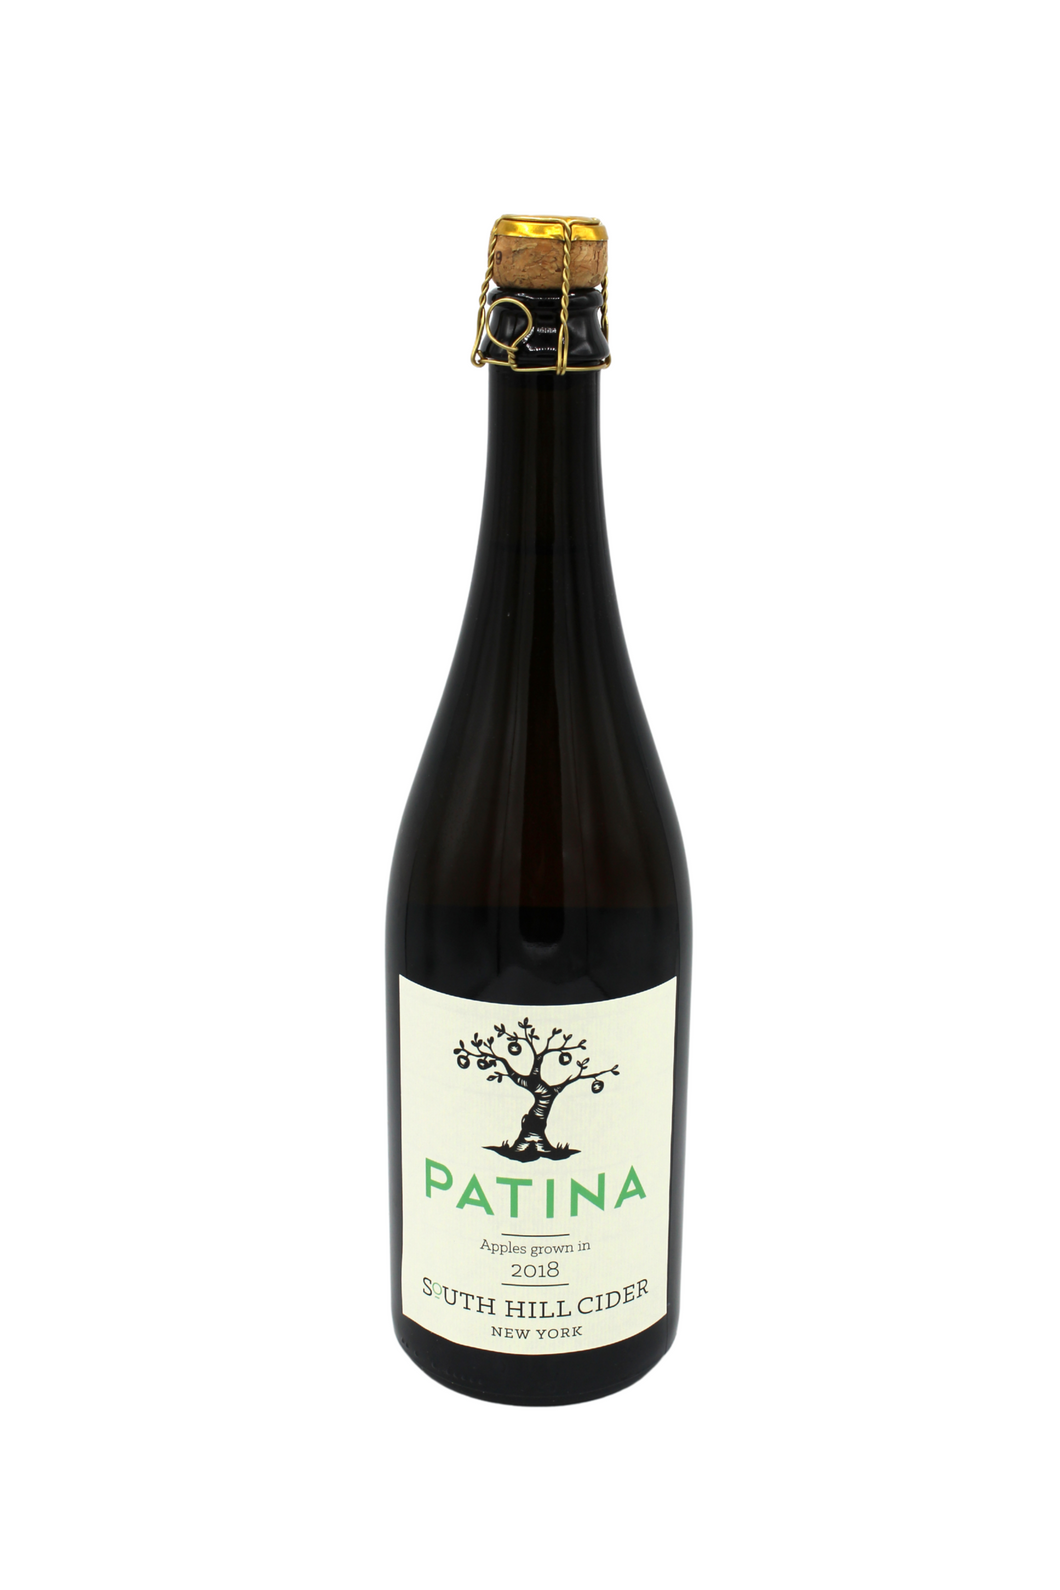 Patina, South Hill Cider 2019